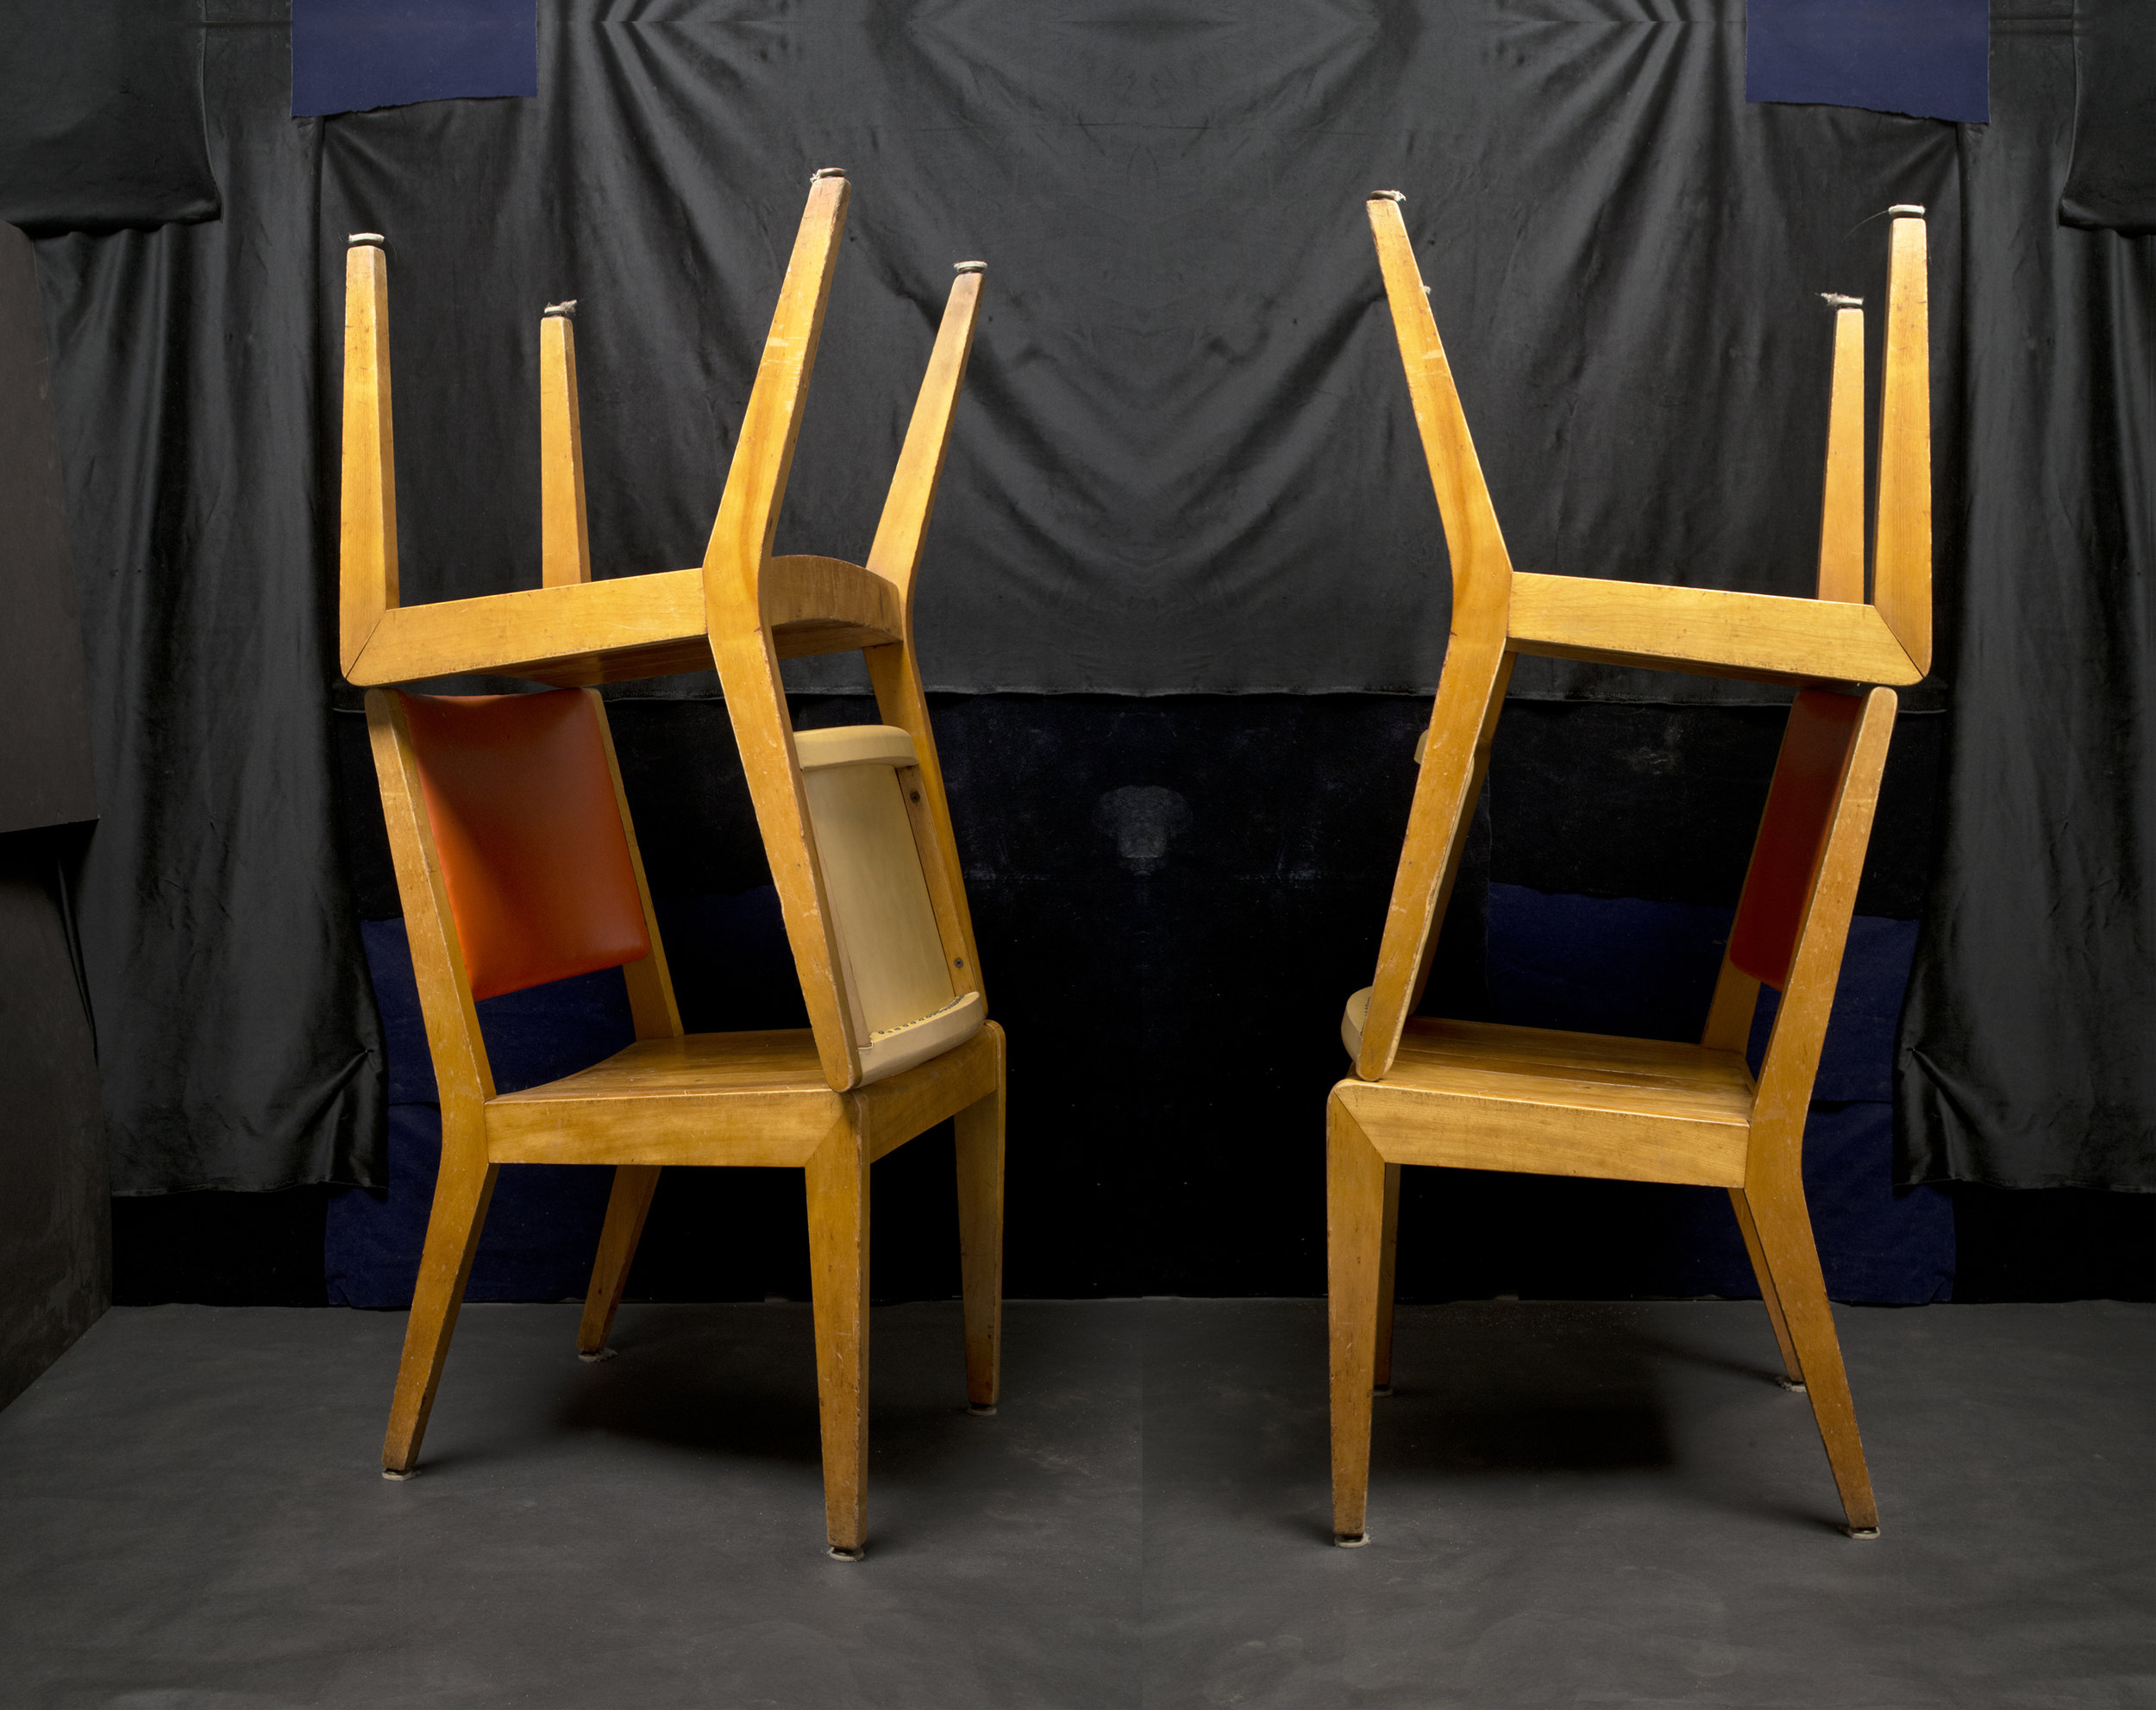  Two Chairs for Doris Salcedo &nbsp;2016 